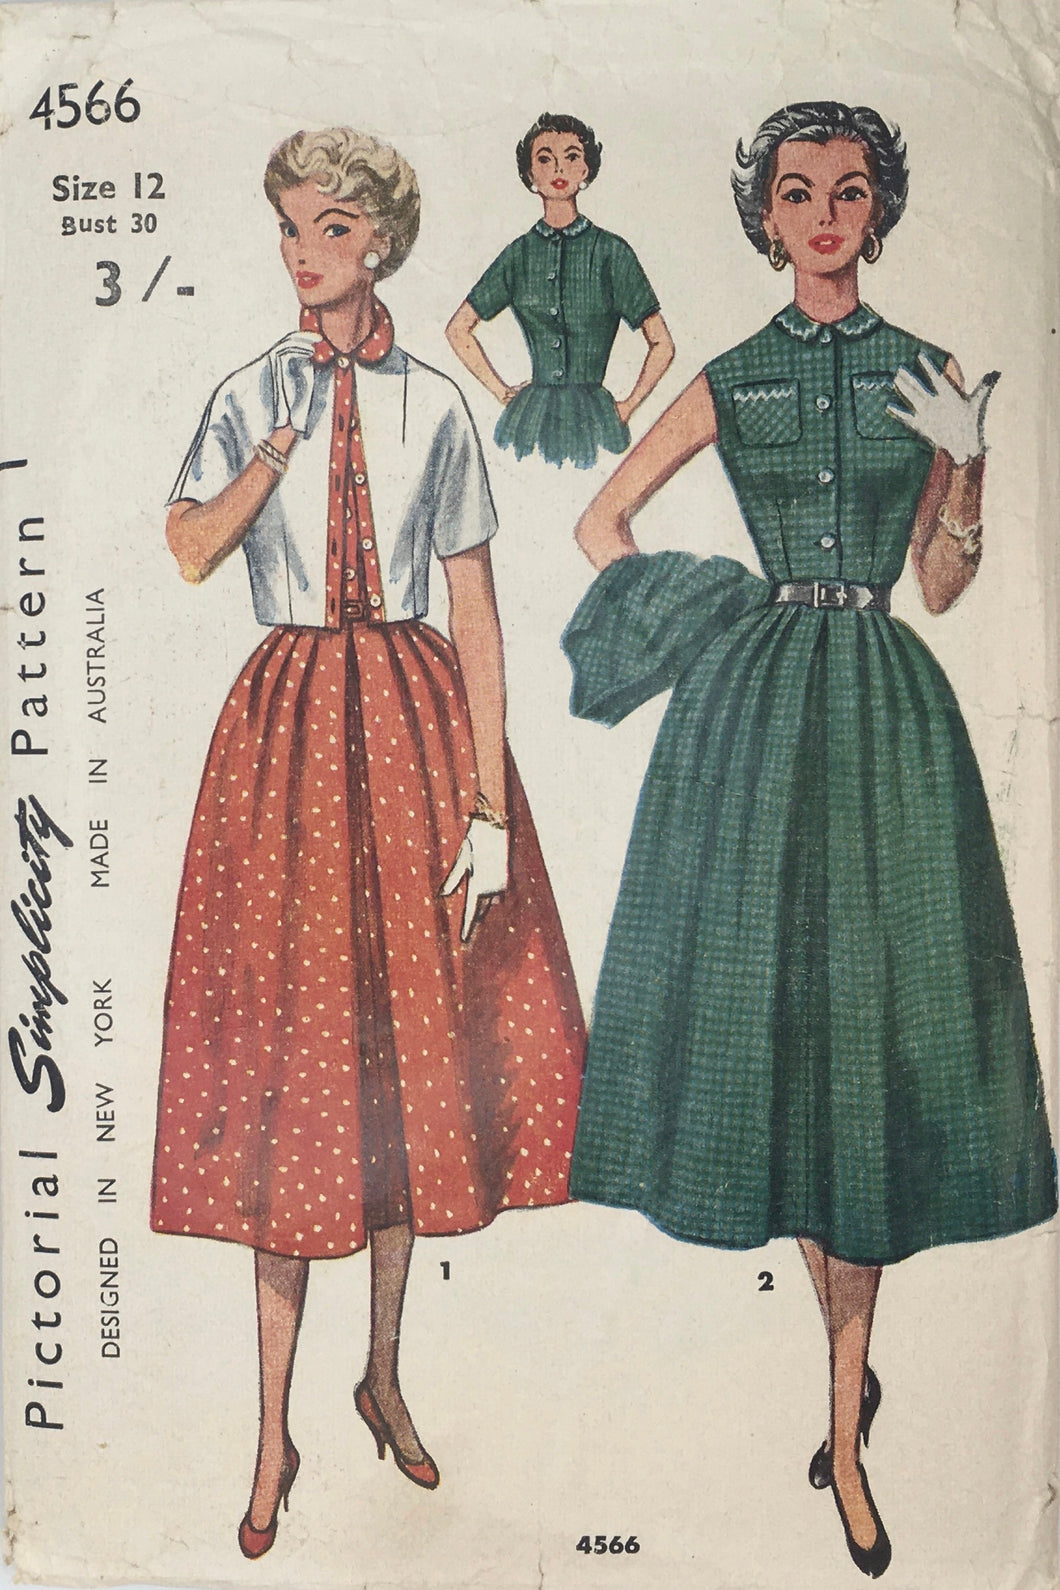 1953 Vintage Sewing Pattern: Simplicity 4566